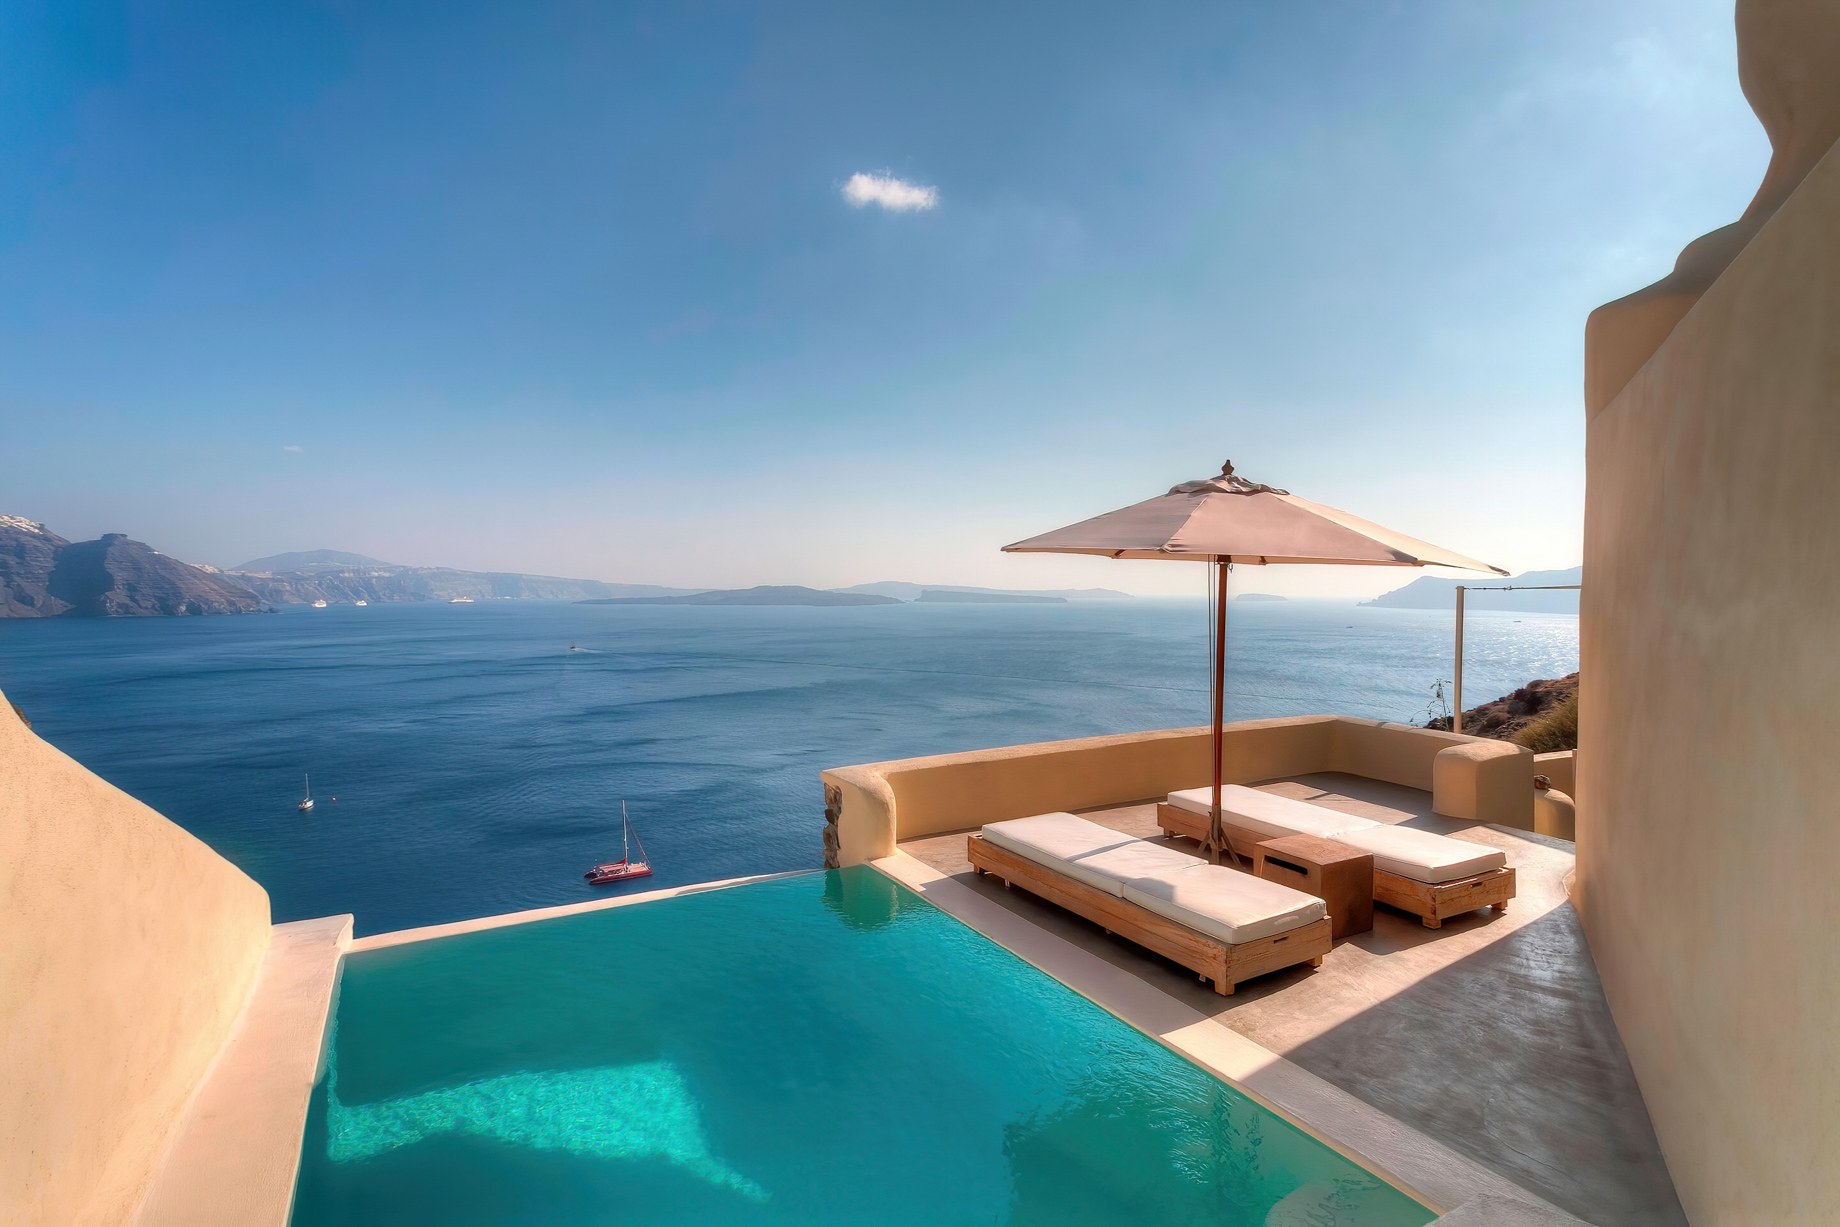 Mystique Hotel Santorini – Oia, Santorini Island, Greece – Mystery Villa Private Ocean View Pool